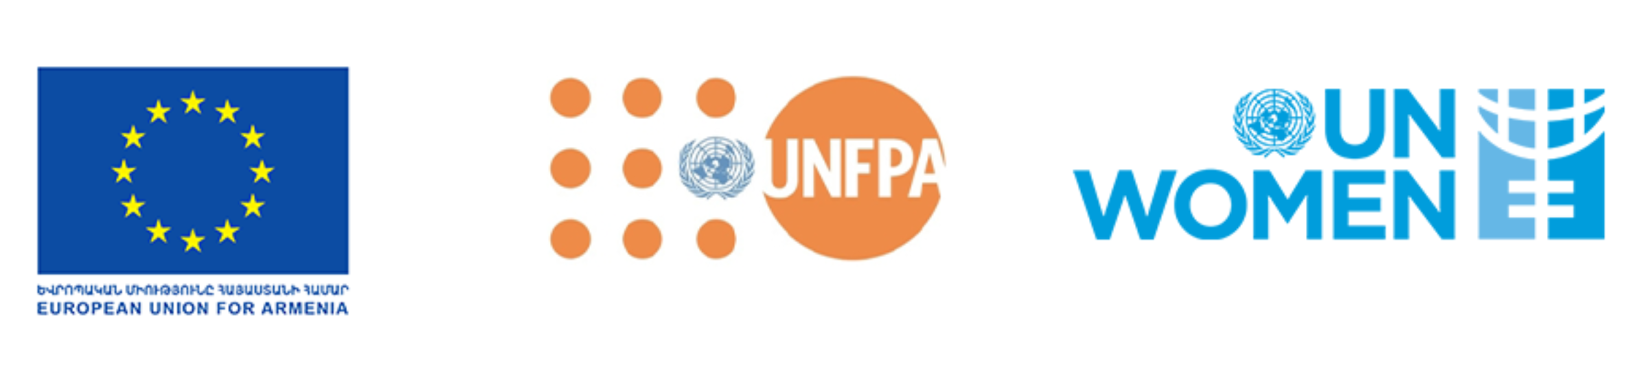 EU, UNFPA, UN Women logos